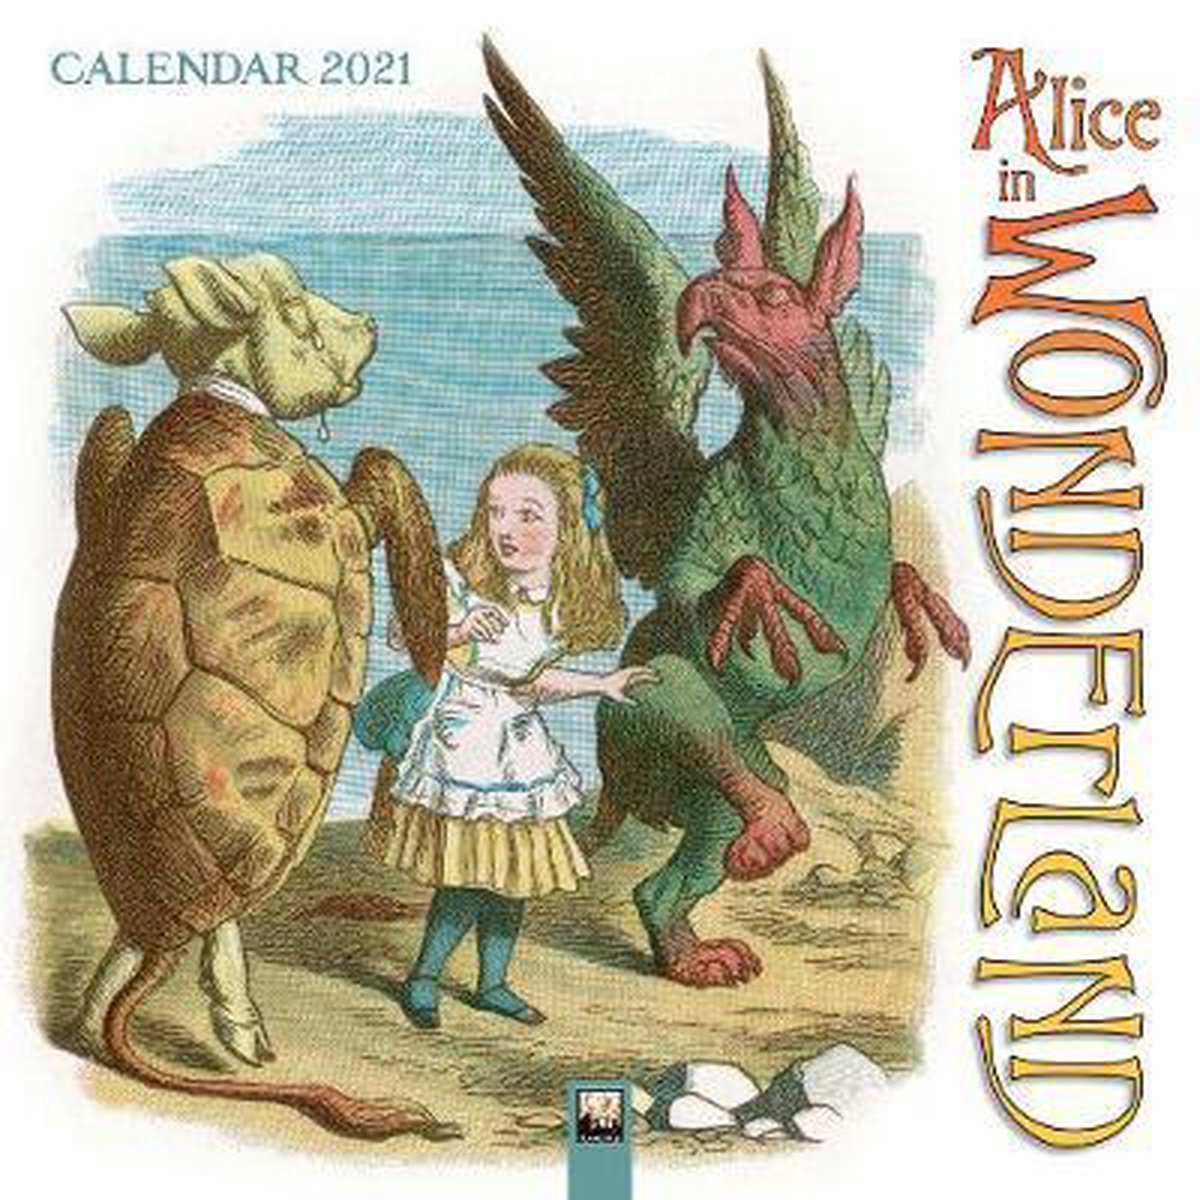 Alice in Wonderland/Alice im Wunderland 2021